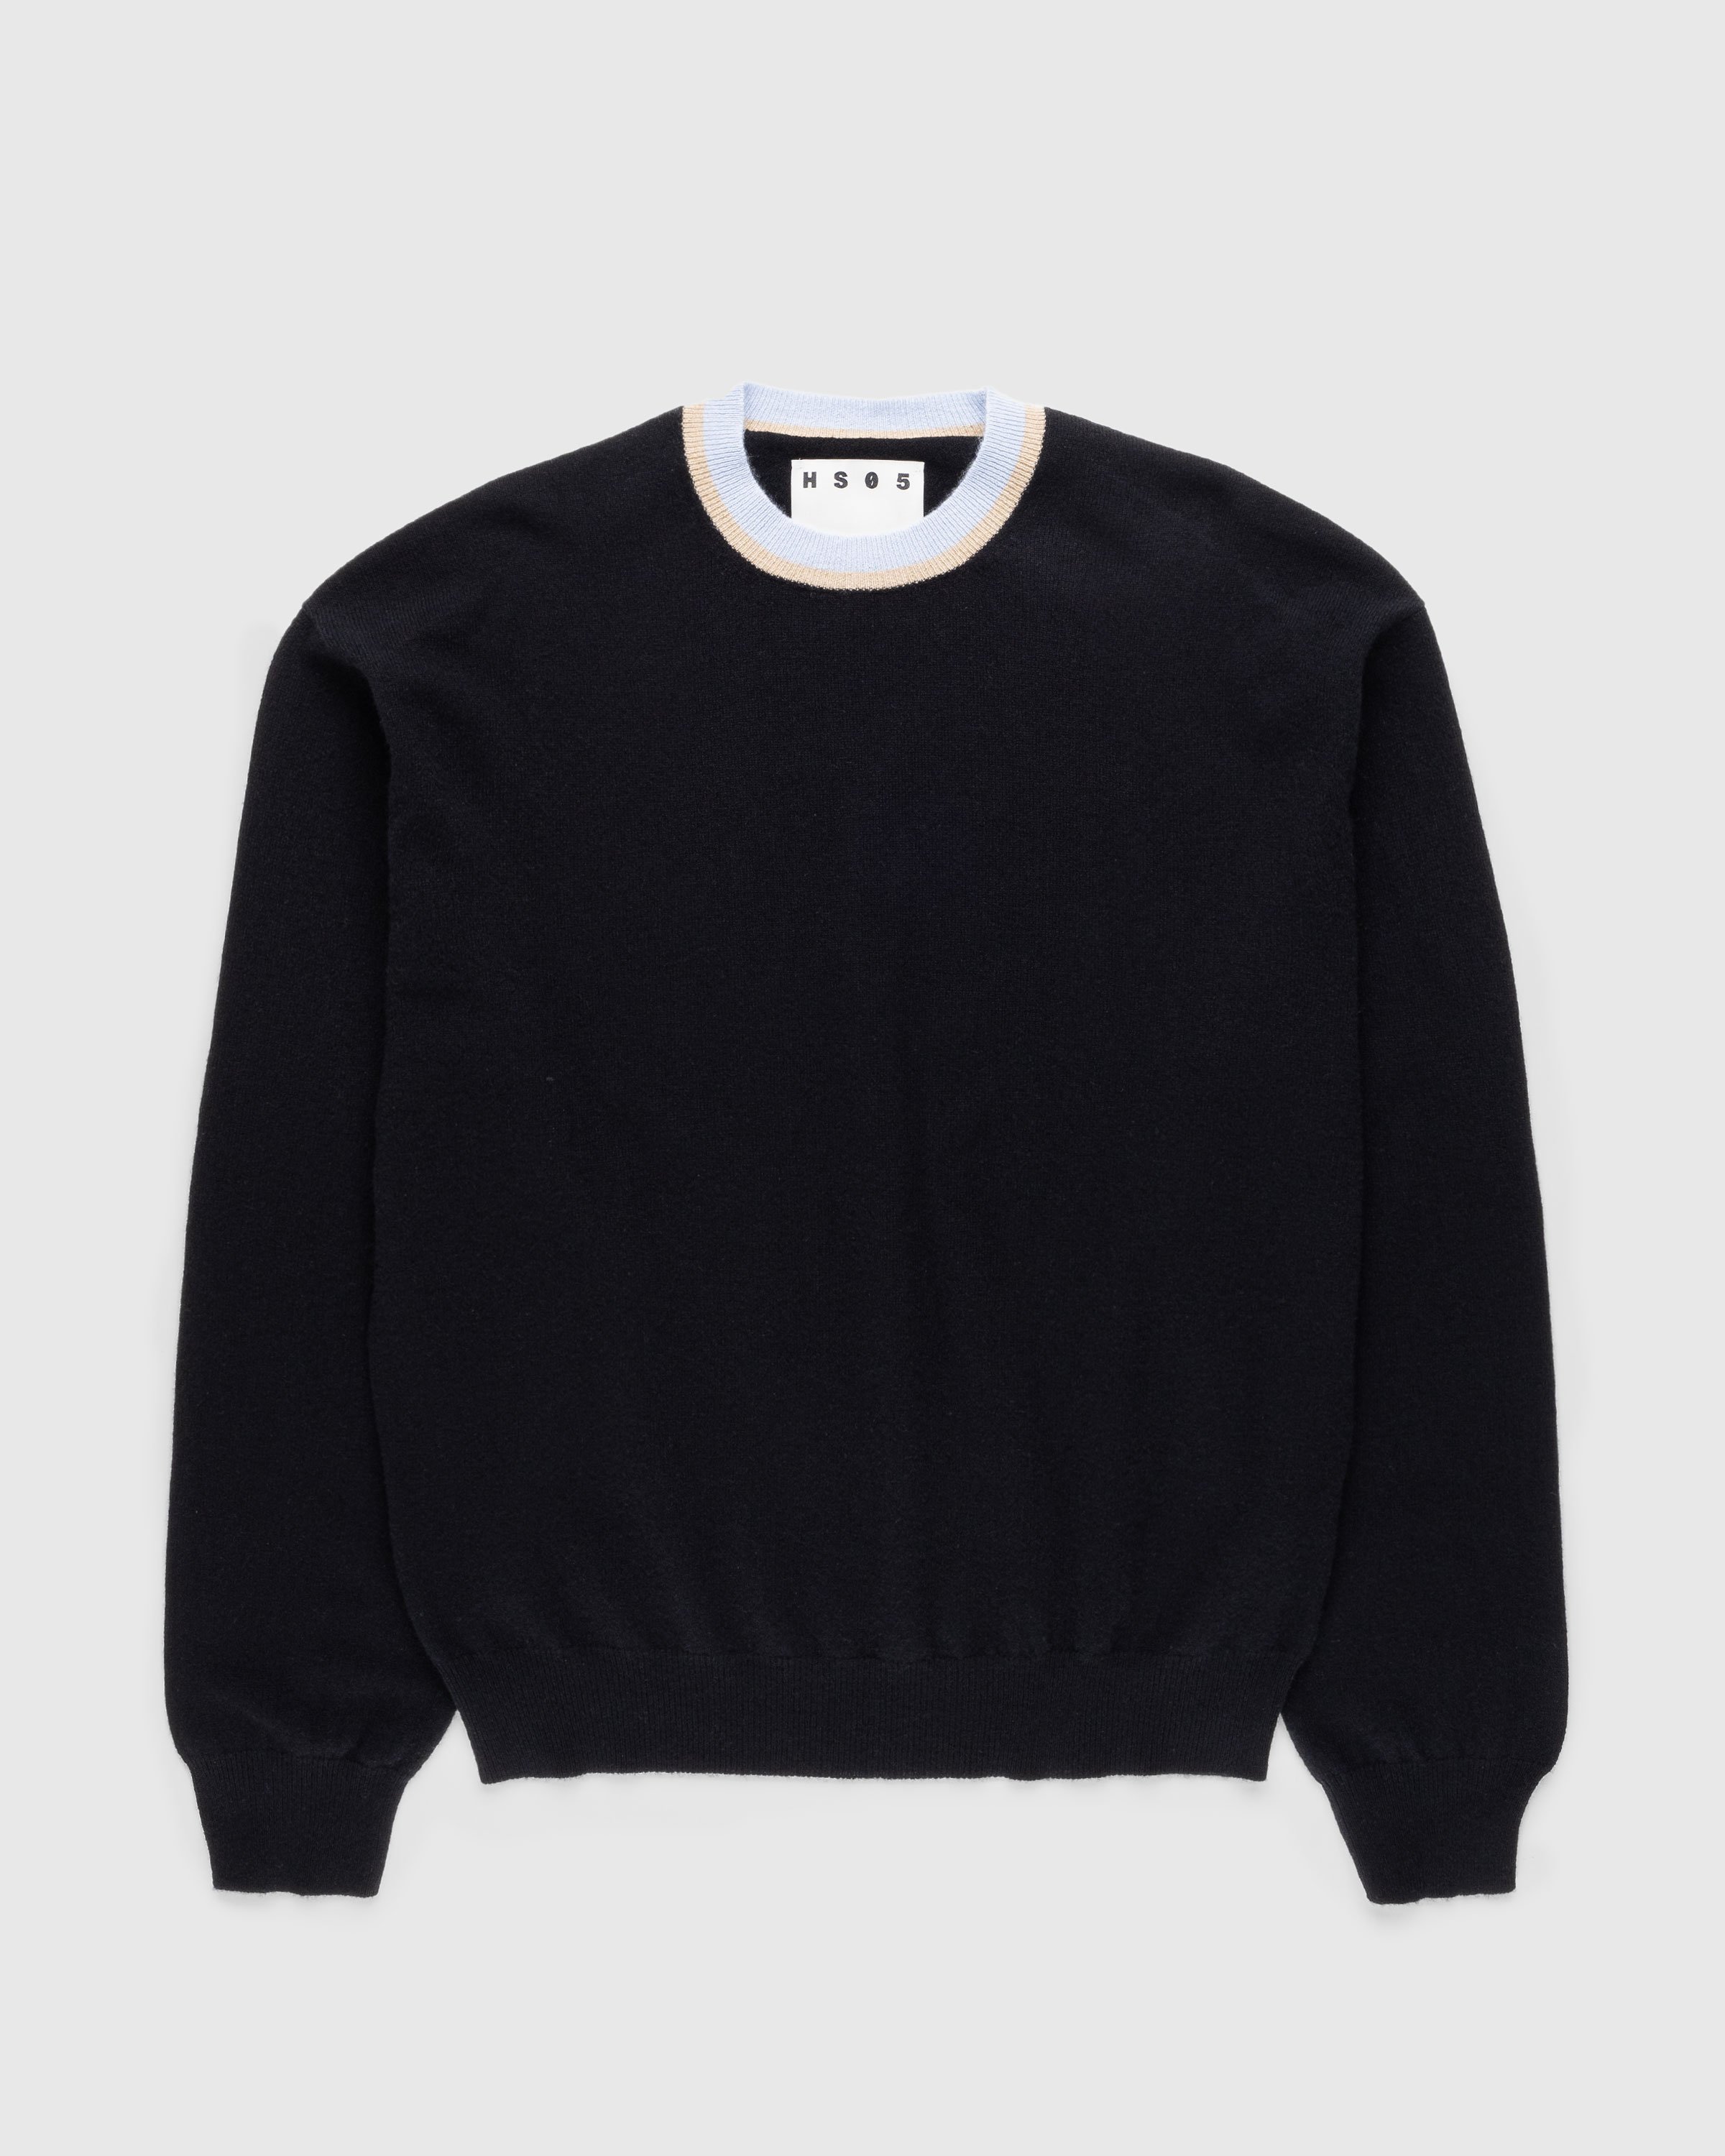 Highsnobiety HS05 - Cashmere Crew Sweater Black - Clothing - Black - Image 1